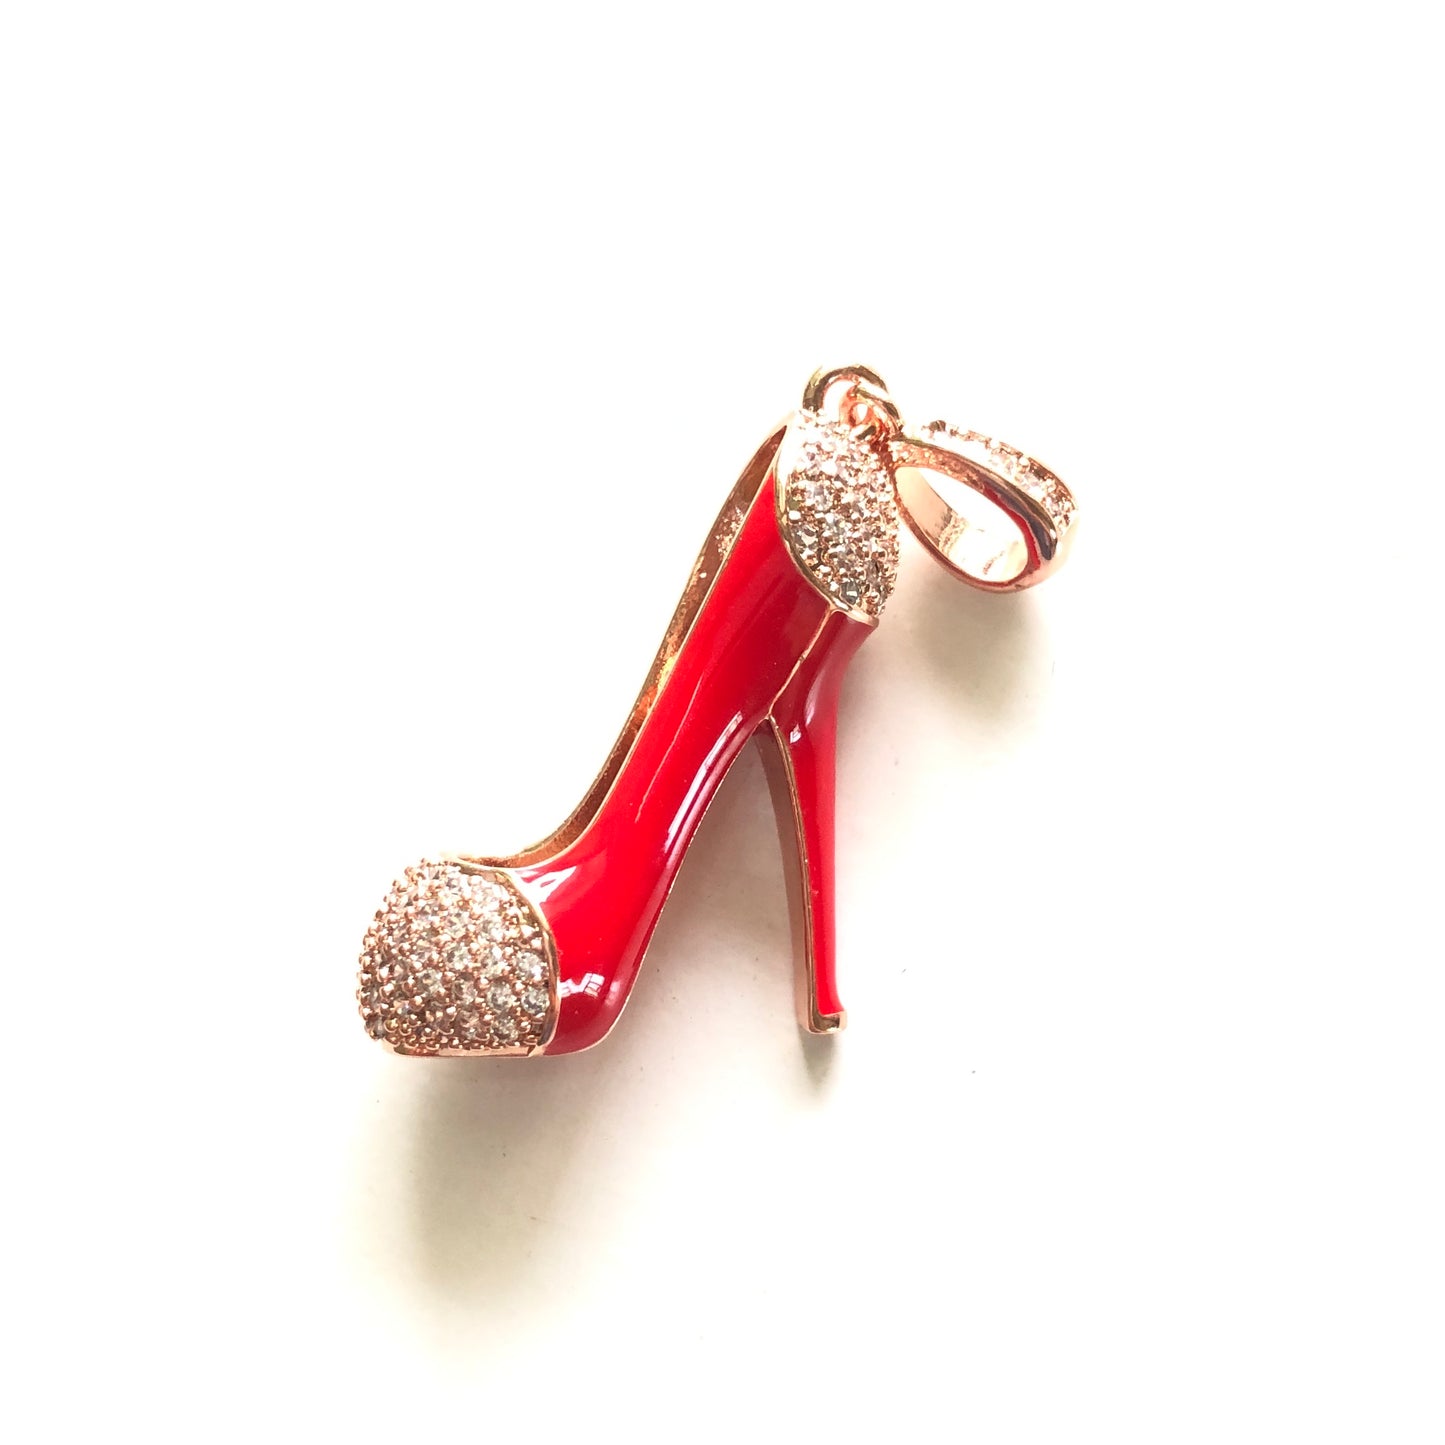 10pcs/lot 30*26mm CZ Paved Red High Heel Shoe Charms Rose Gold CZ Paved Charms High Heels On Sale Charms Beads Beyond